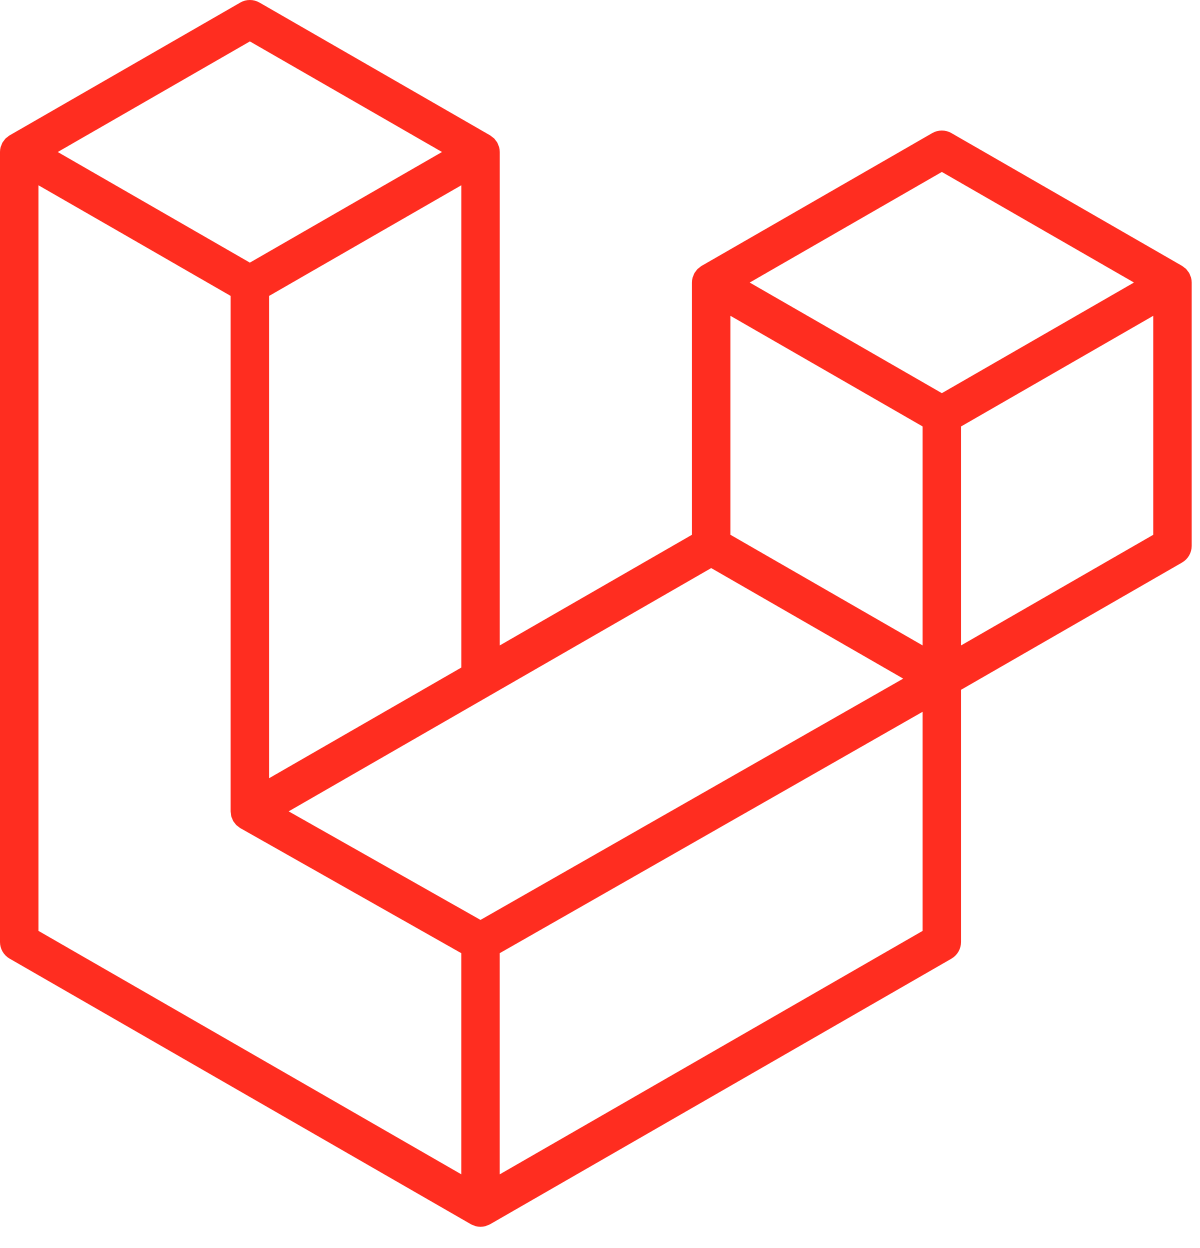 The Laravel logo